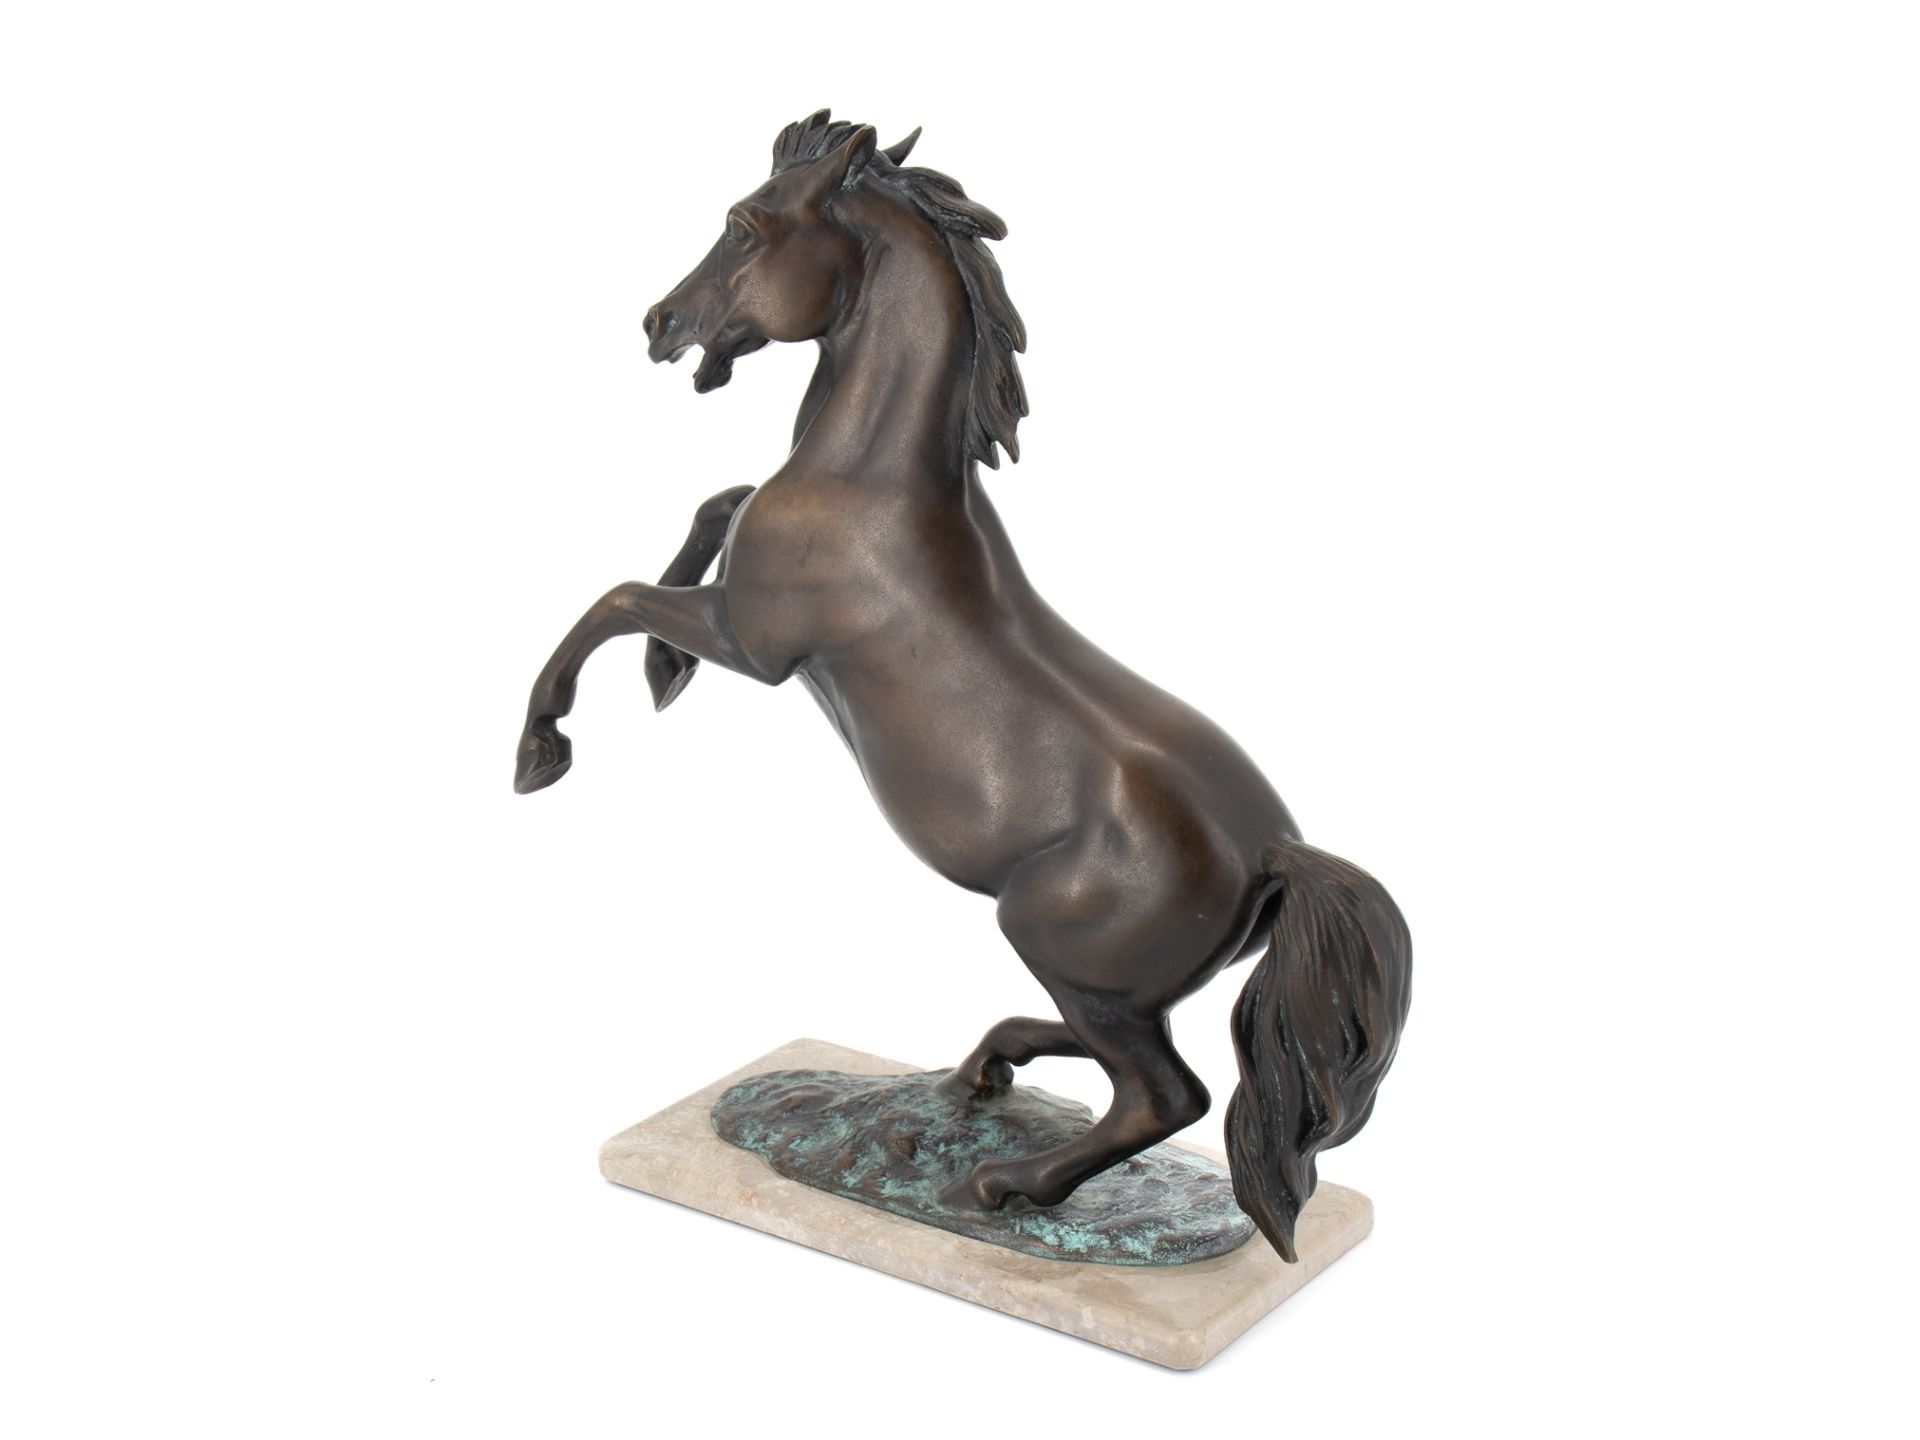 Diller Helmut (1911 - 1984), Bronze sculpture "Steigendes Pferd" (Rising Horse) - Image 3 of 9